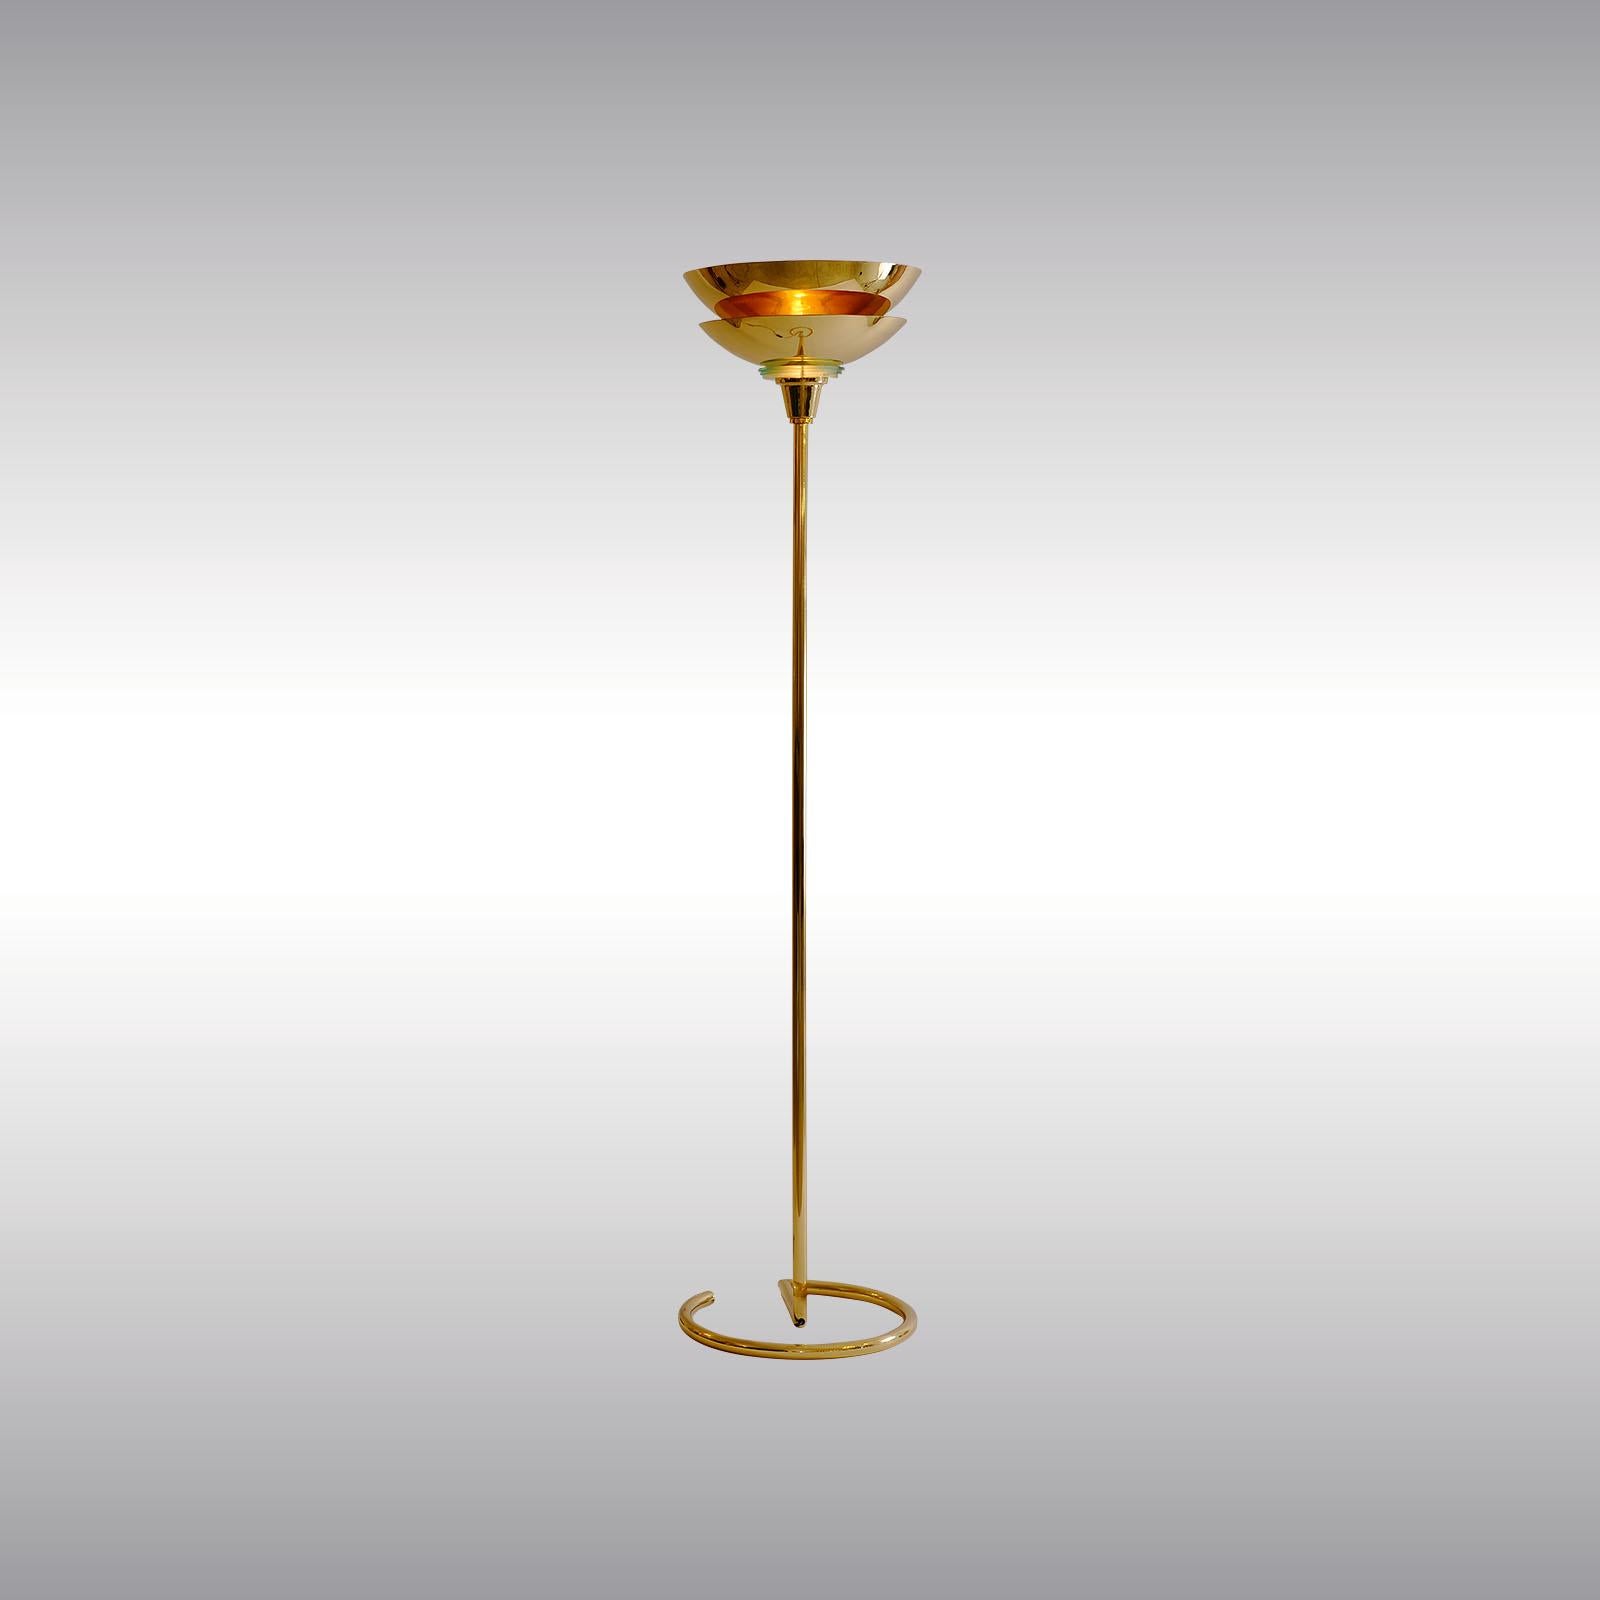 Varnished Deutsches Bauhaus, Art Deco Brass Floor Lamp, Re-Edition For Sale